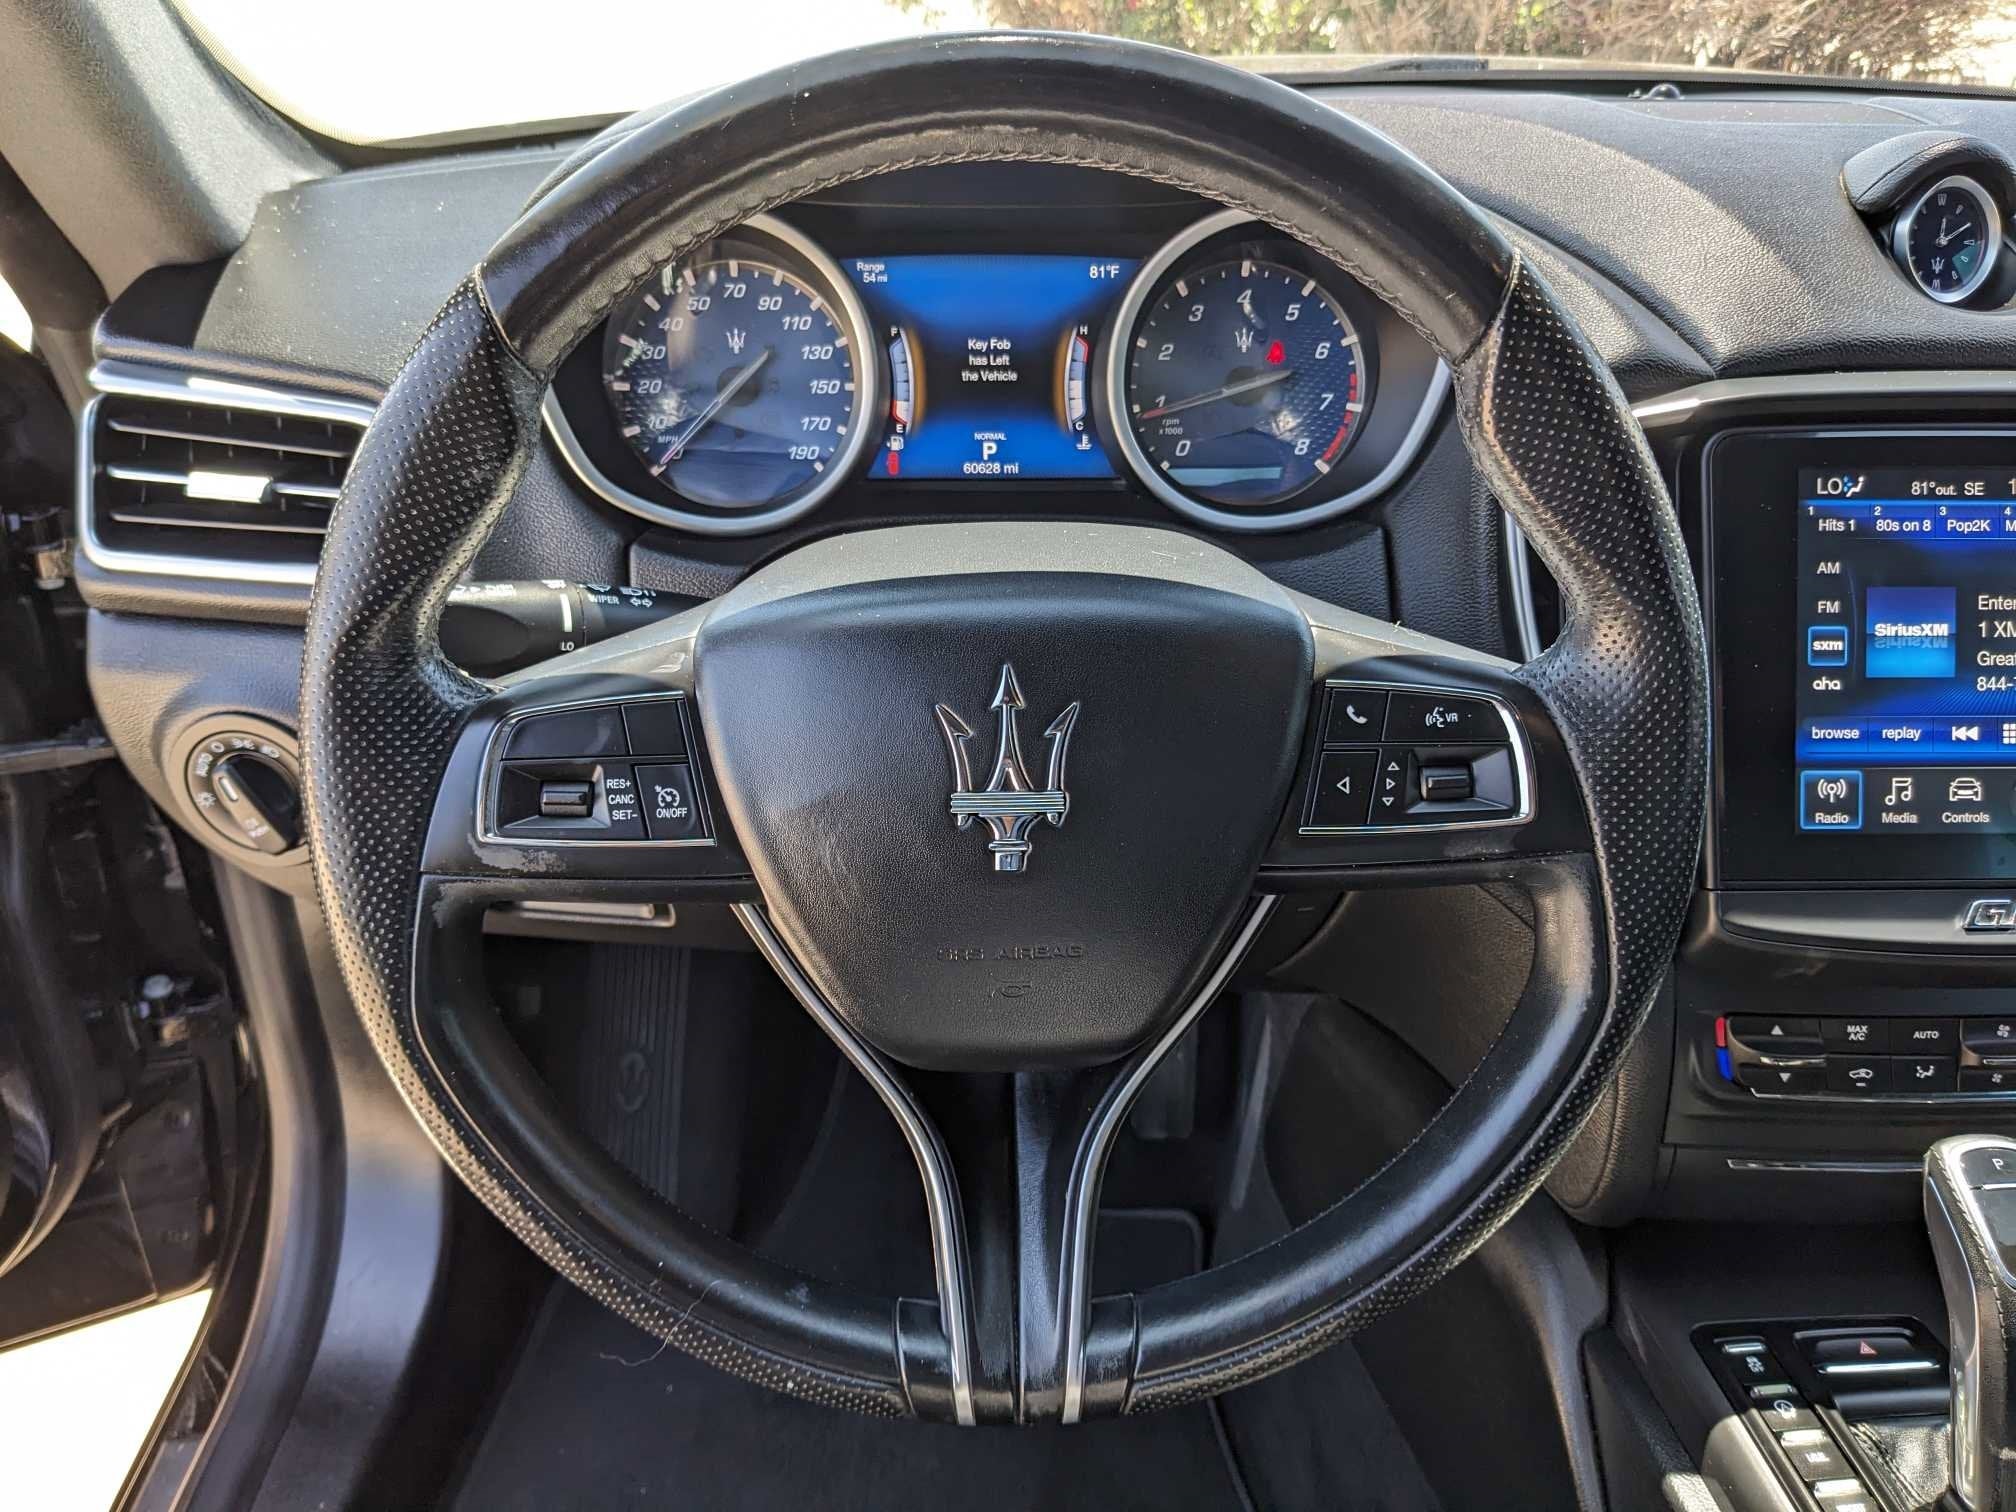 2020 Maserati Ghibli 